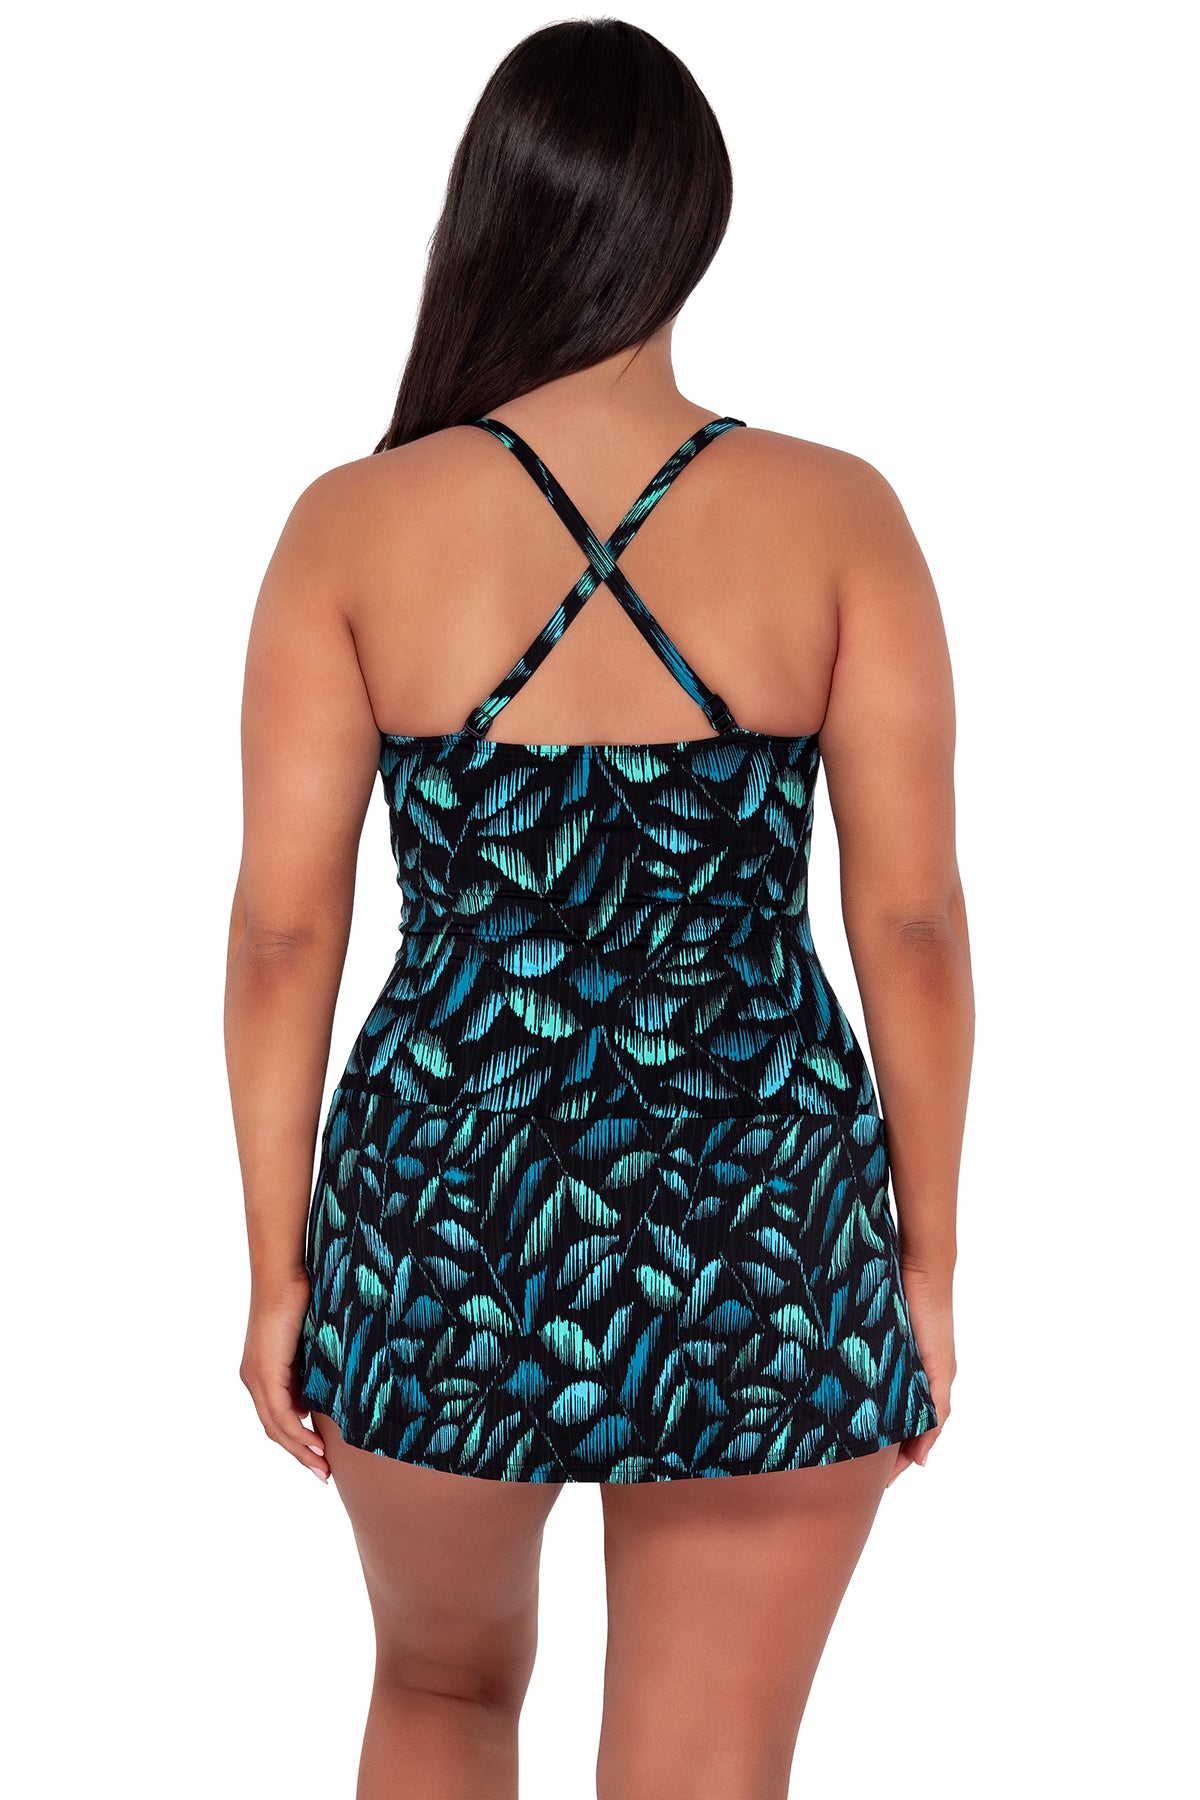 pose #1 of Nicki wearing Sunsets Escape Cascade Seagrass Texture Sienna Swim Dress